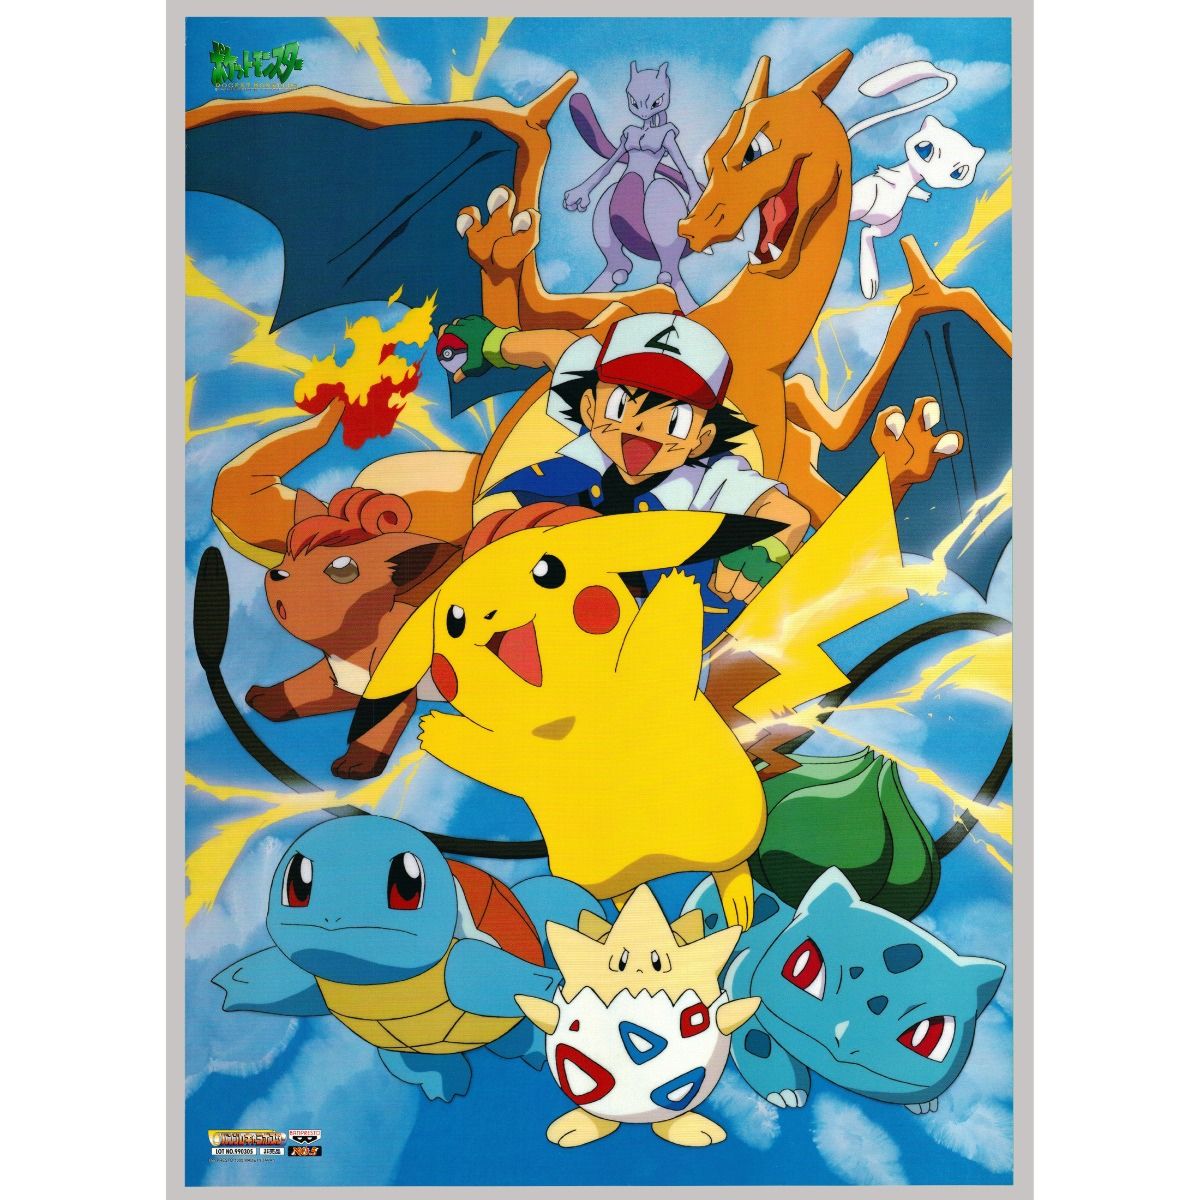 Buy Original Pokemon Anime Poster Online